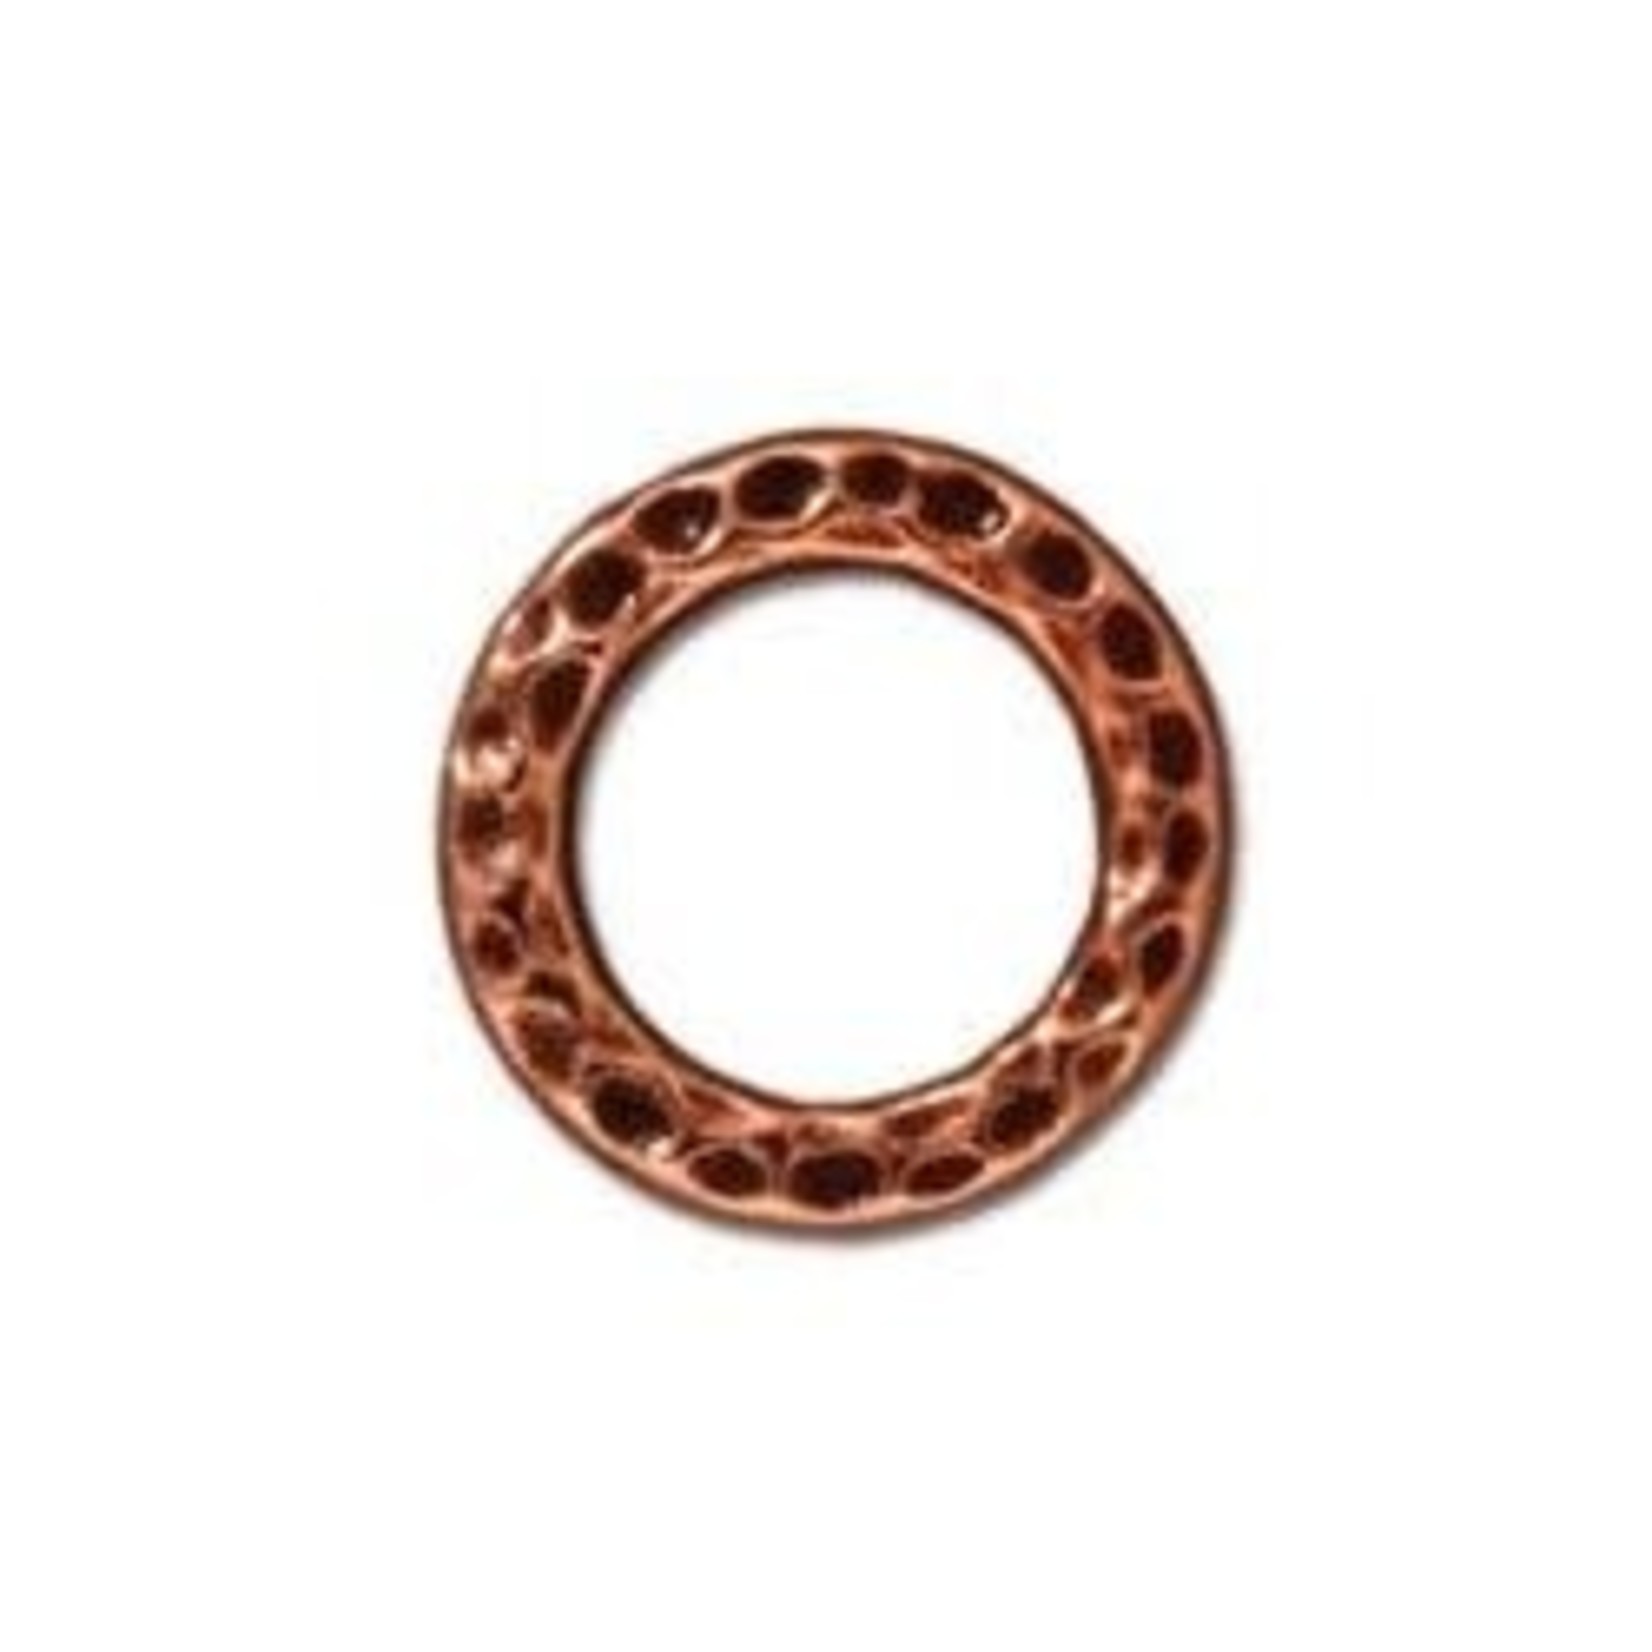 TierraCast Hammertone Medium 13mm Ring - Antique Copper Plated